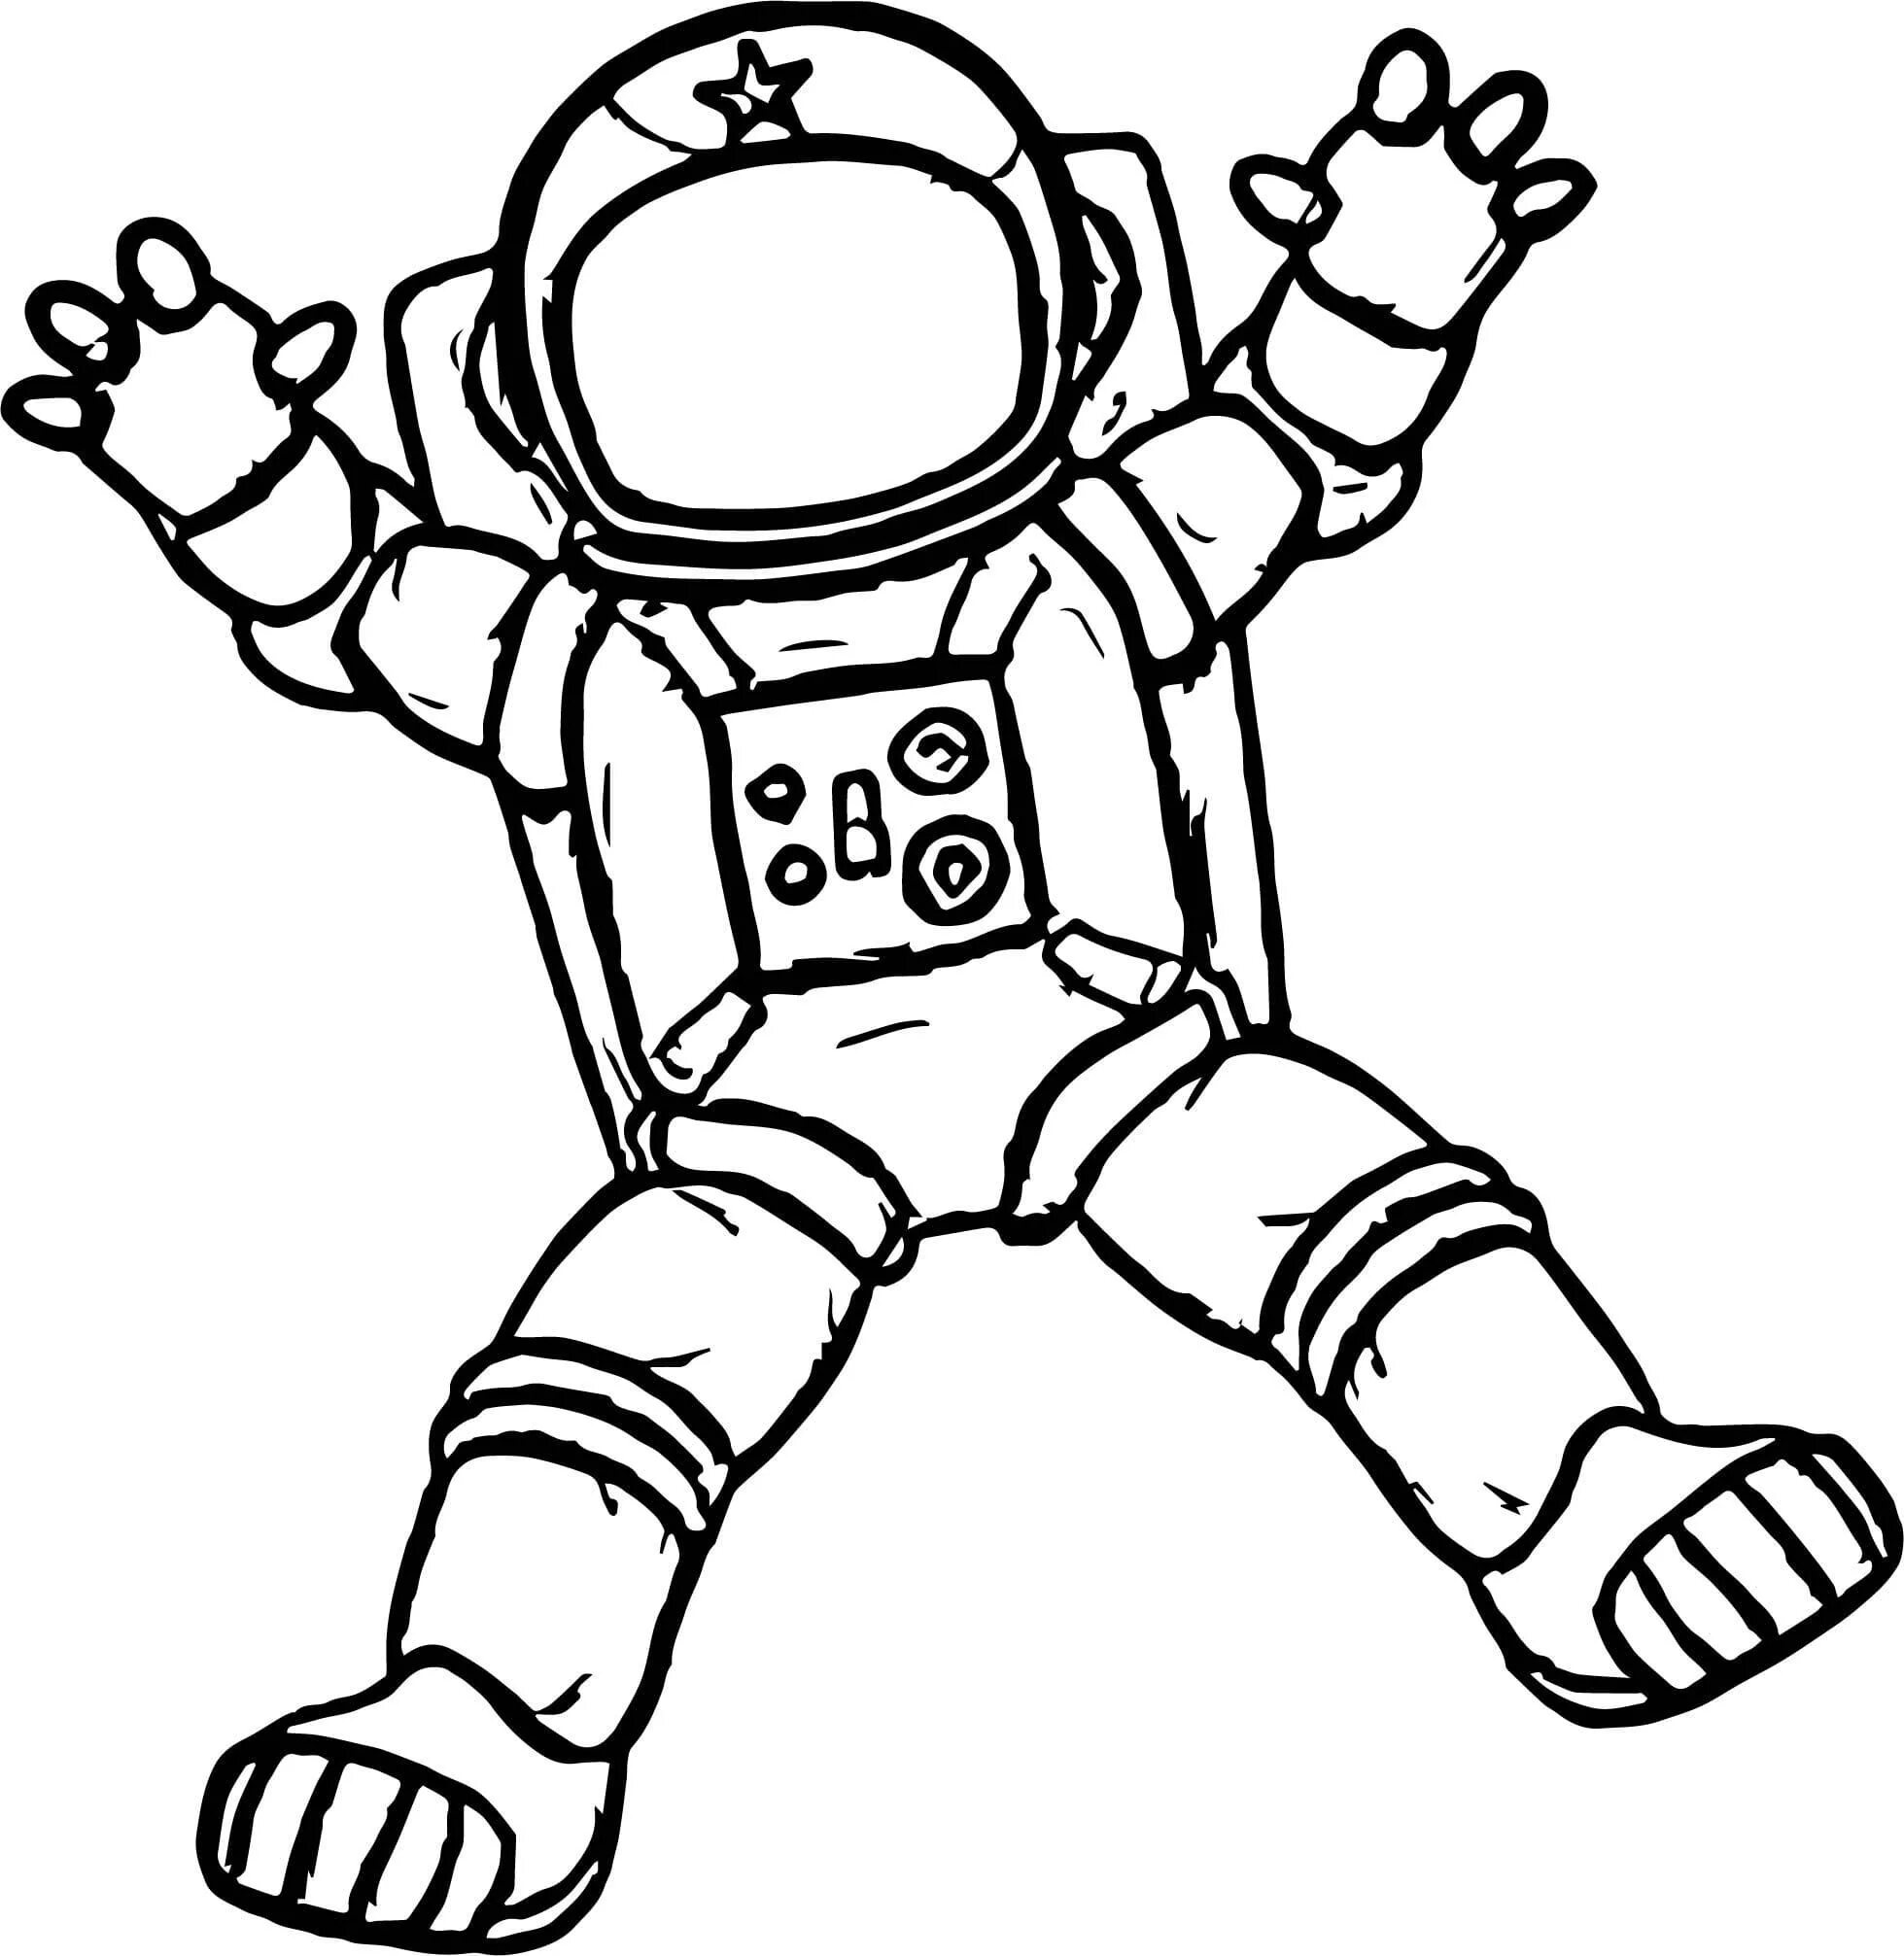 Cosmonaut in space suit #6